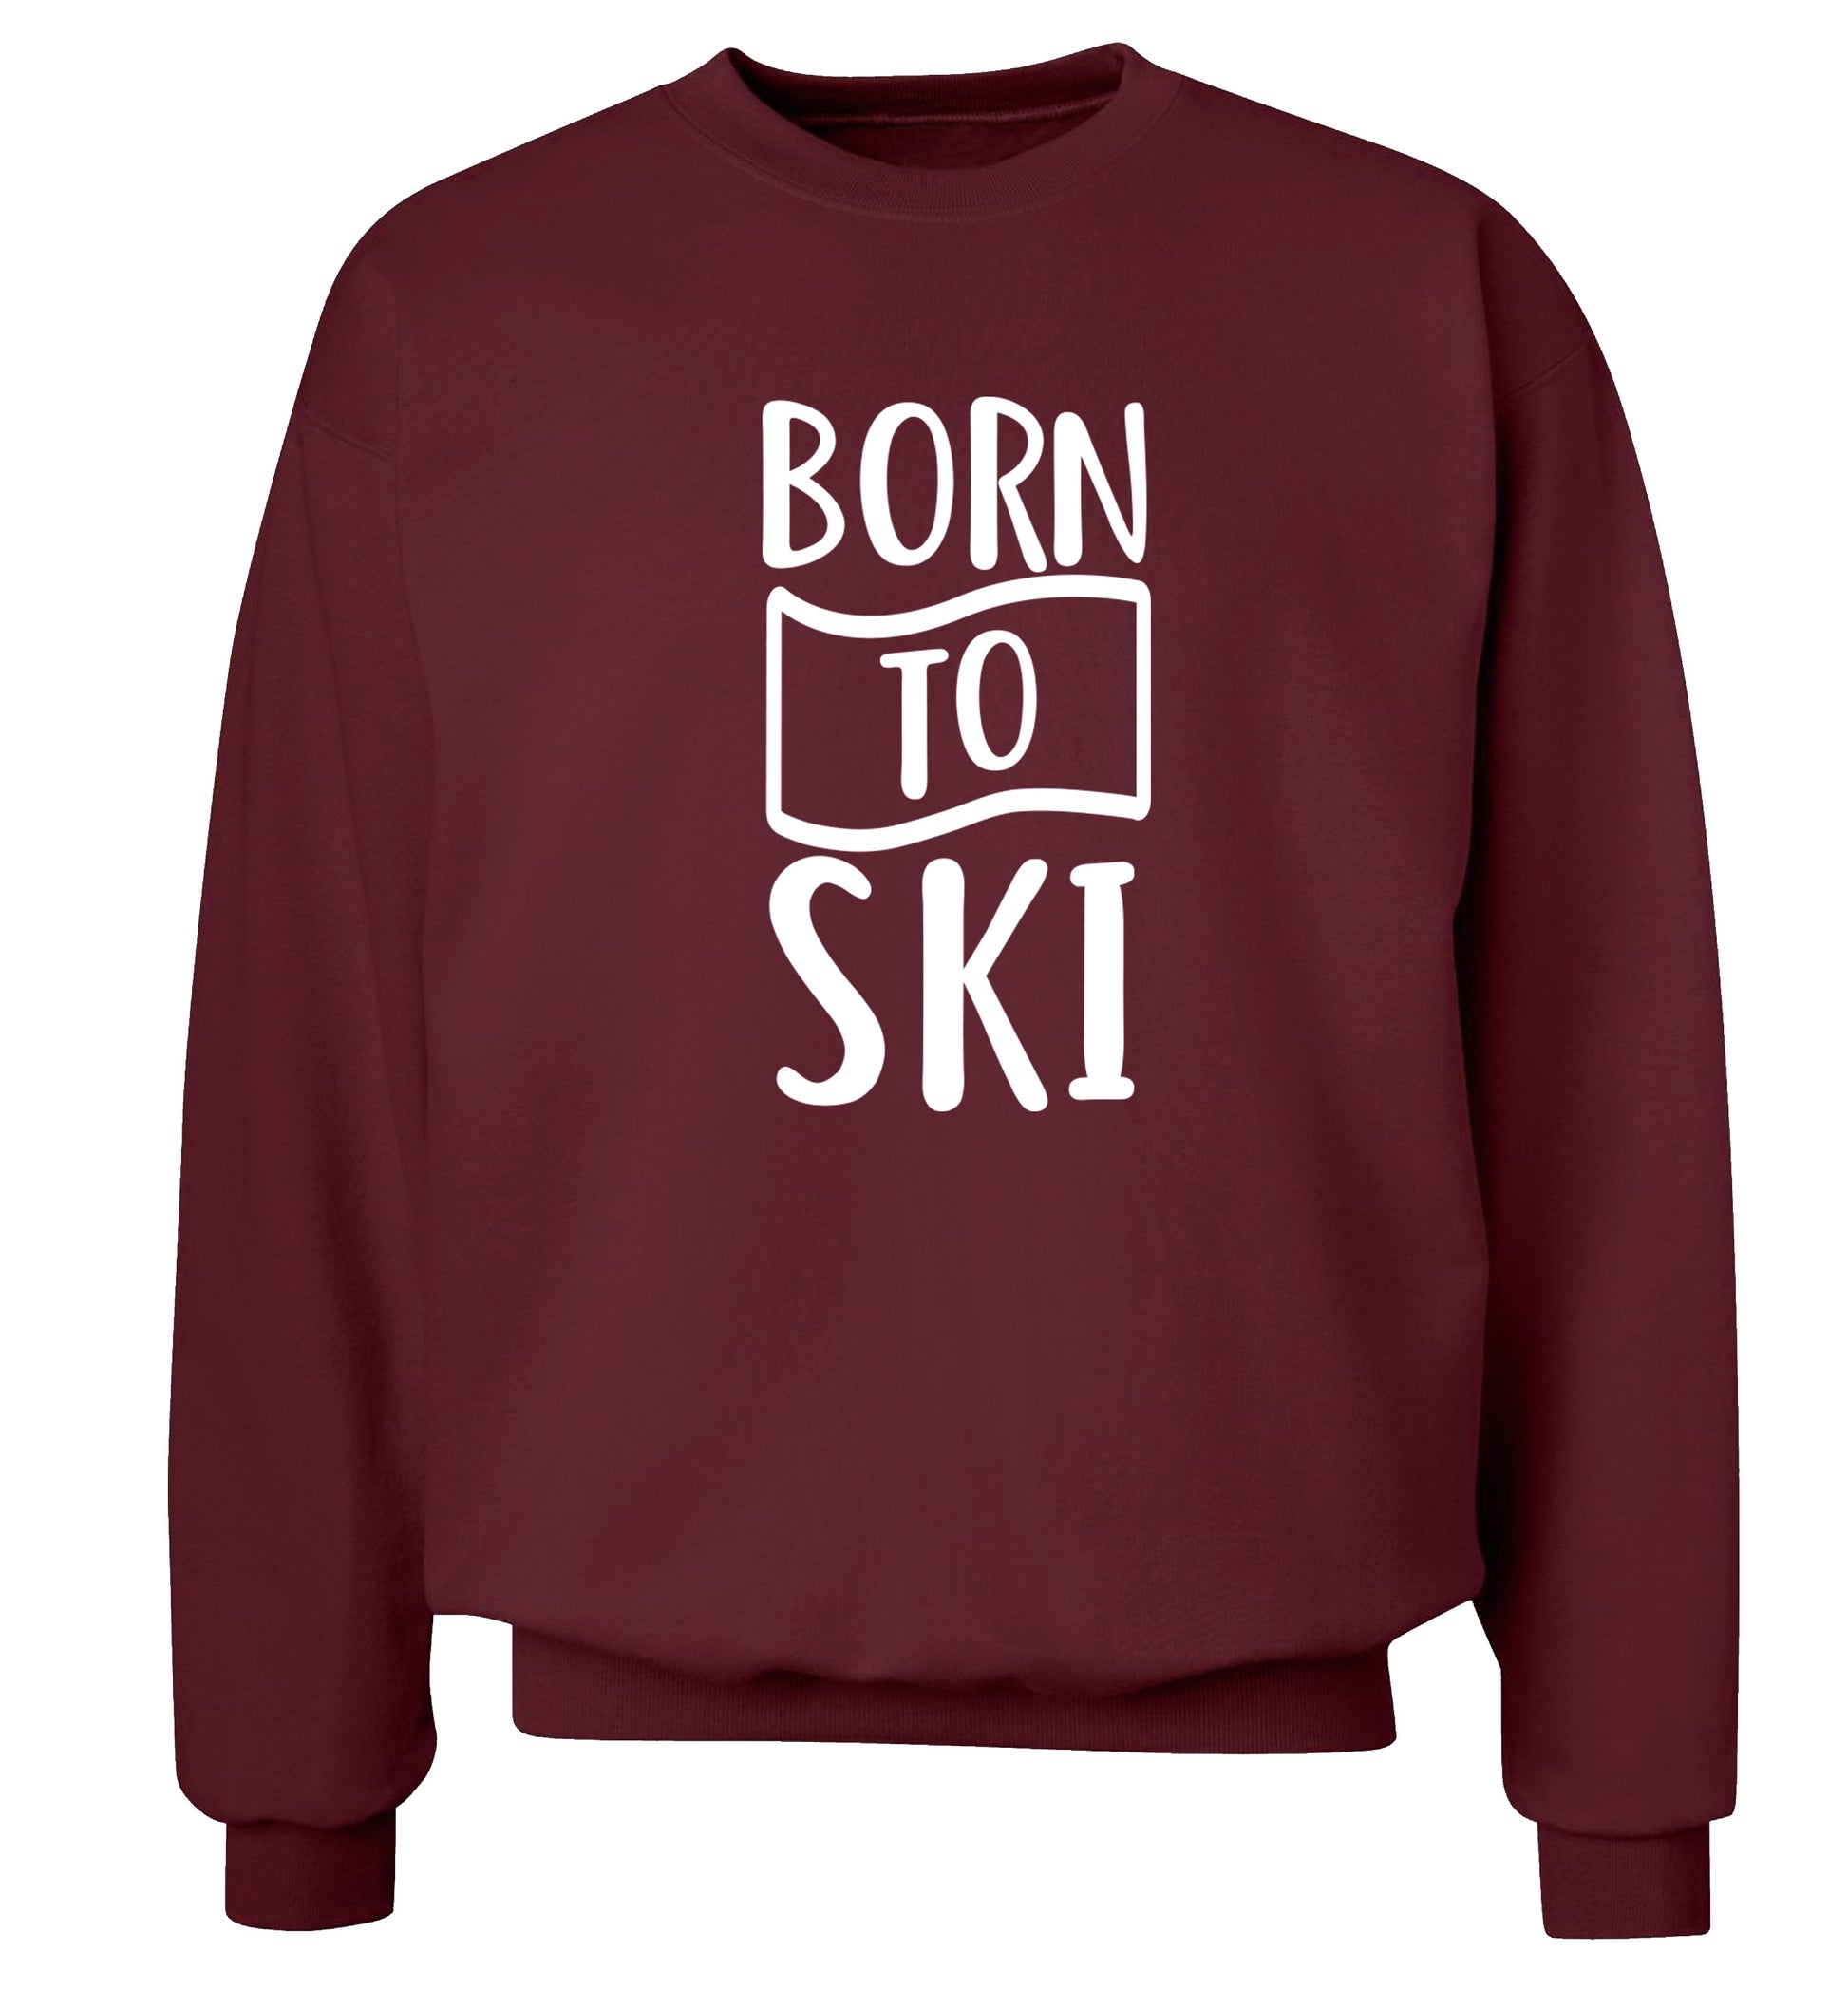 Born to ski Adult's unisexmaroon Sweater 2XL